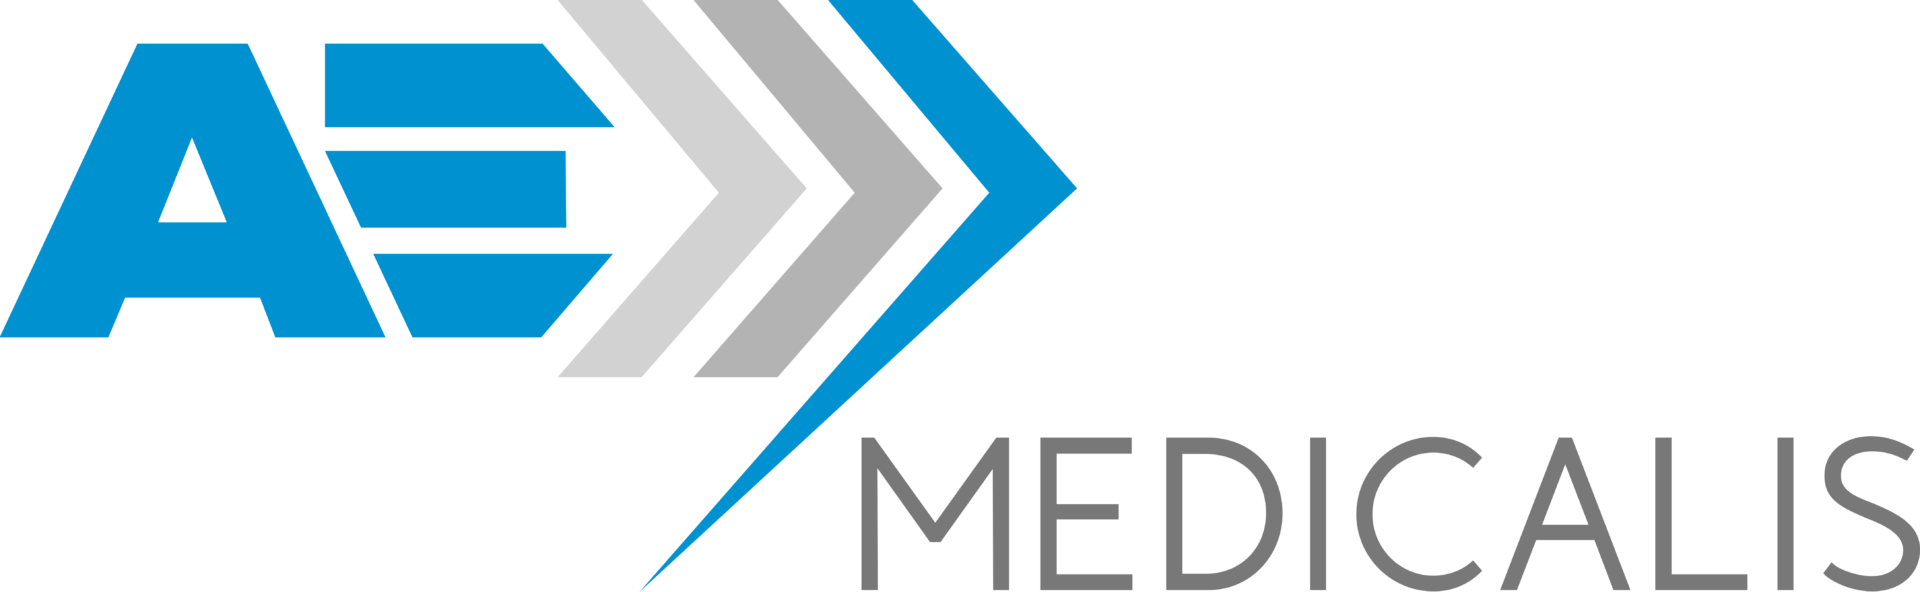 https://rtcardiacsystems.us/wp-content/uploads/2020/06/Logo-AE-Medicalis-Short.png